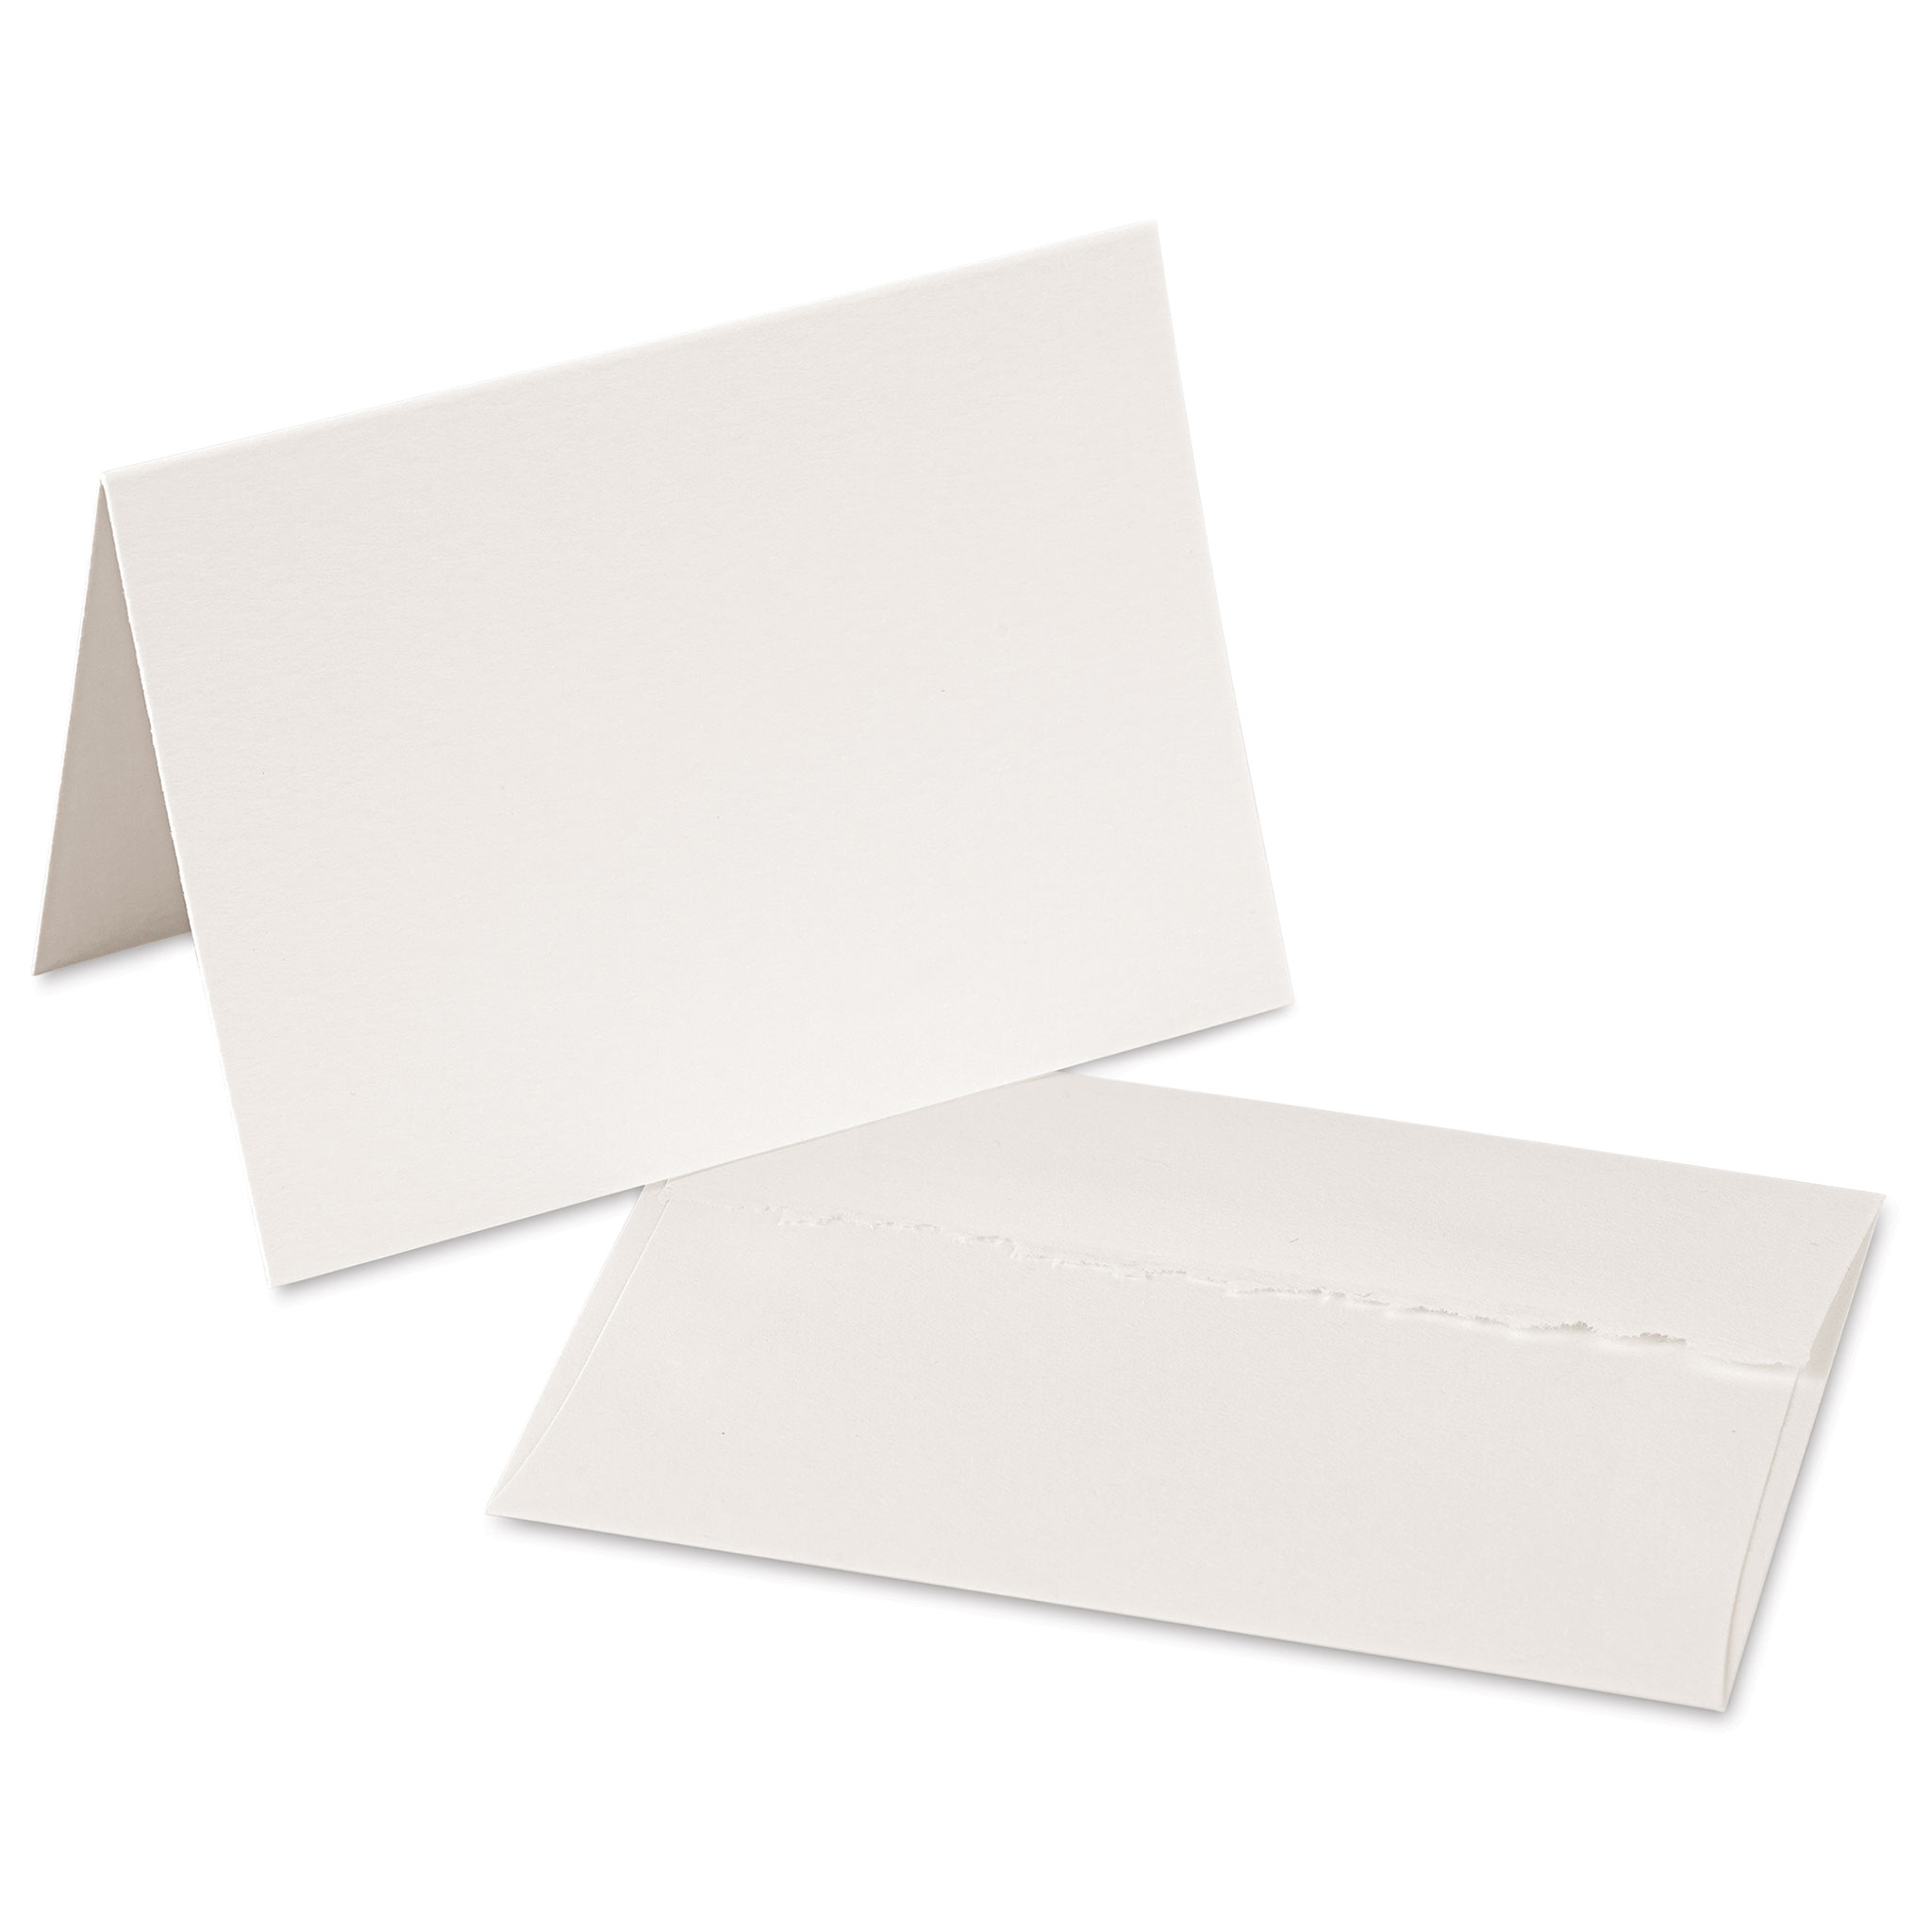 Kimberbell Premium Watercolor Cards/Envelopes (Set of 8), 5 x